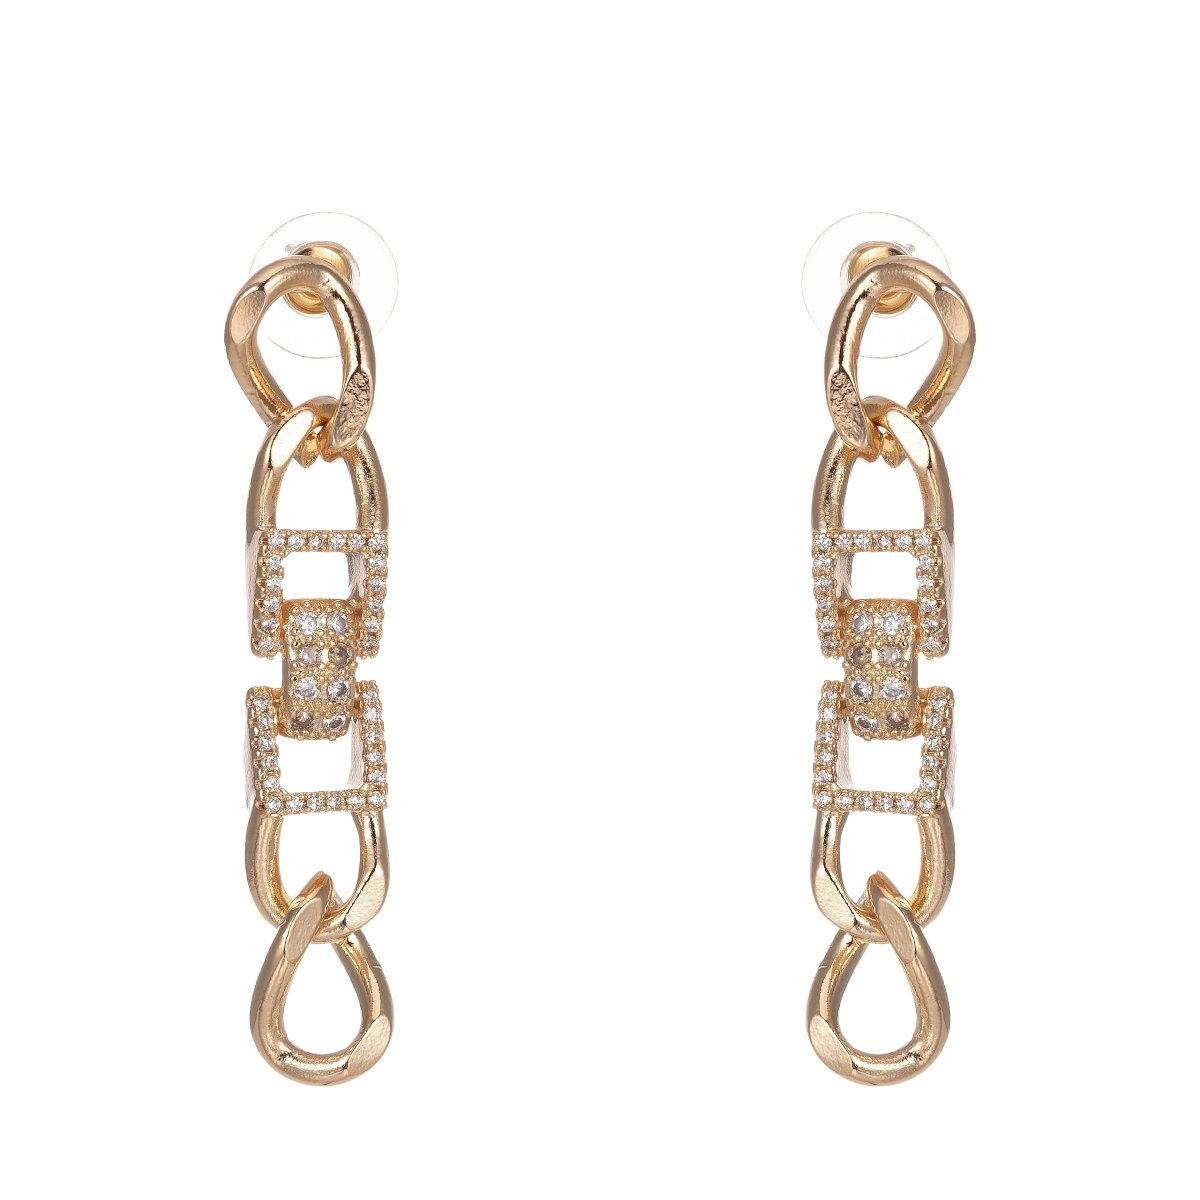 Curb Link Earrings Curb Chain Link Earring • Minimalist Gold Earring Dangle Stud Earring T-020 - DLUXCA